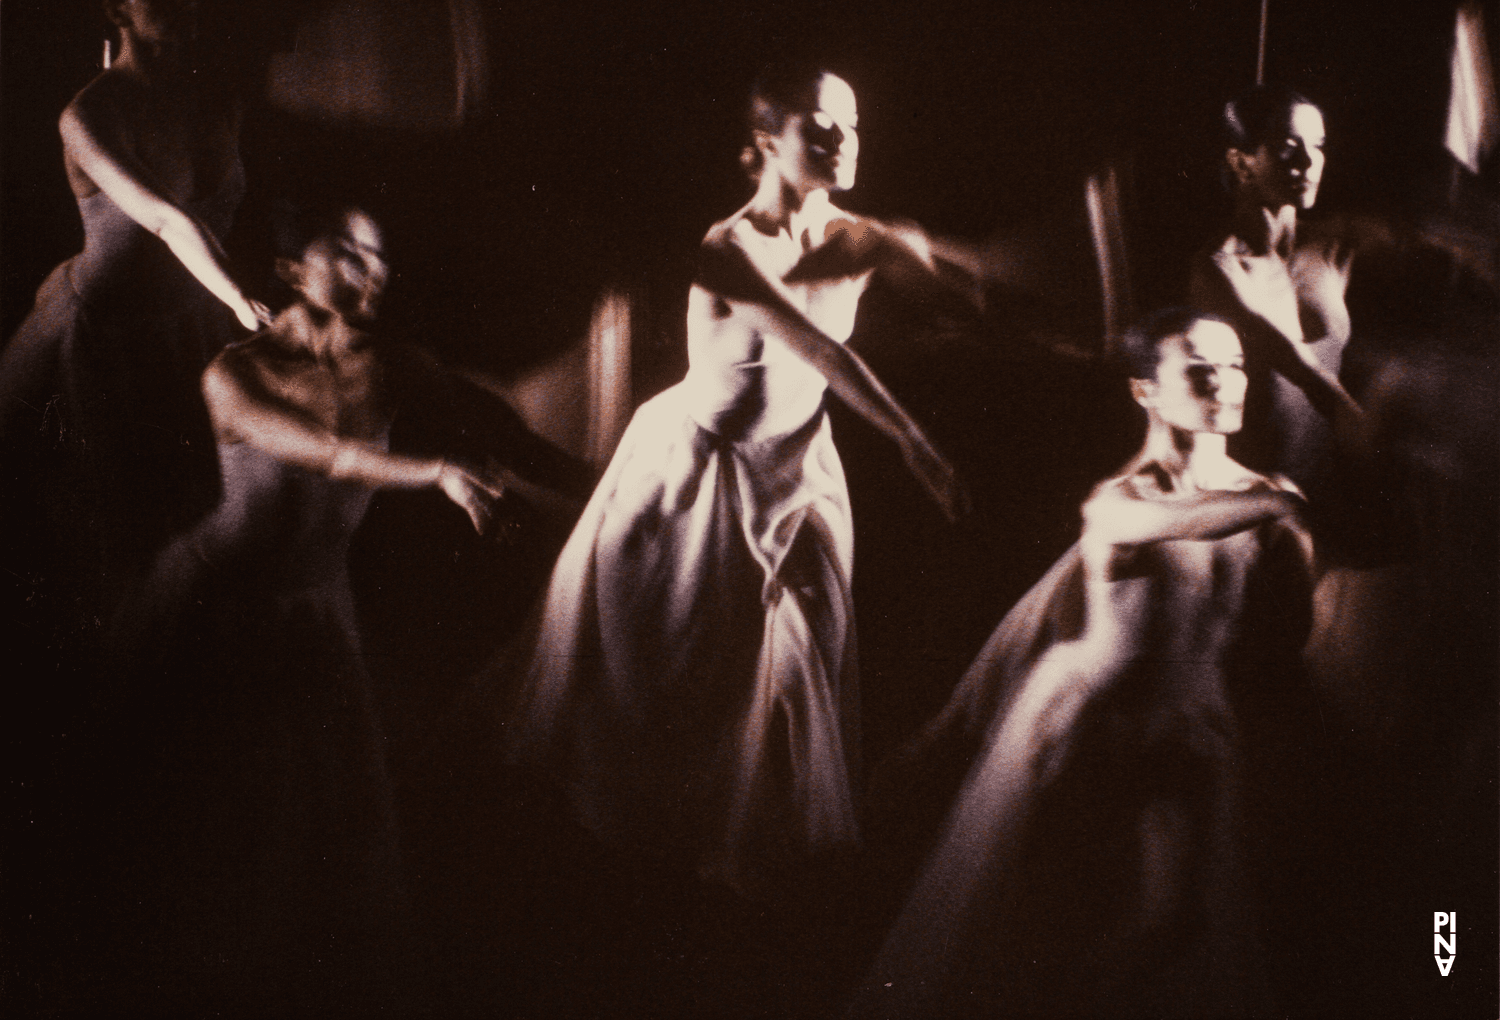 Beatrice Libonati, Ruth Amarante and Mariko Aoyama in “Orpheus und Eurydike” by Pina Bausch